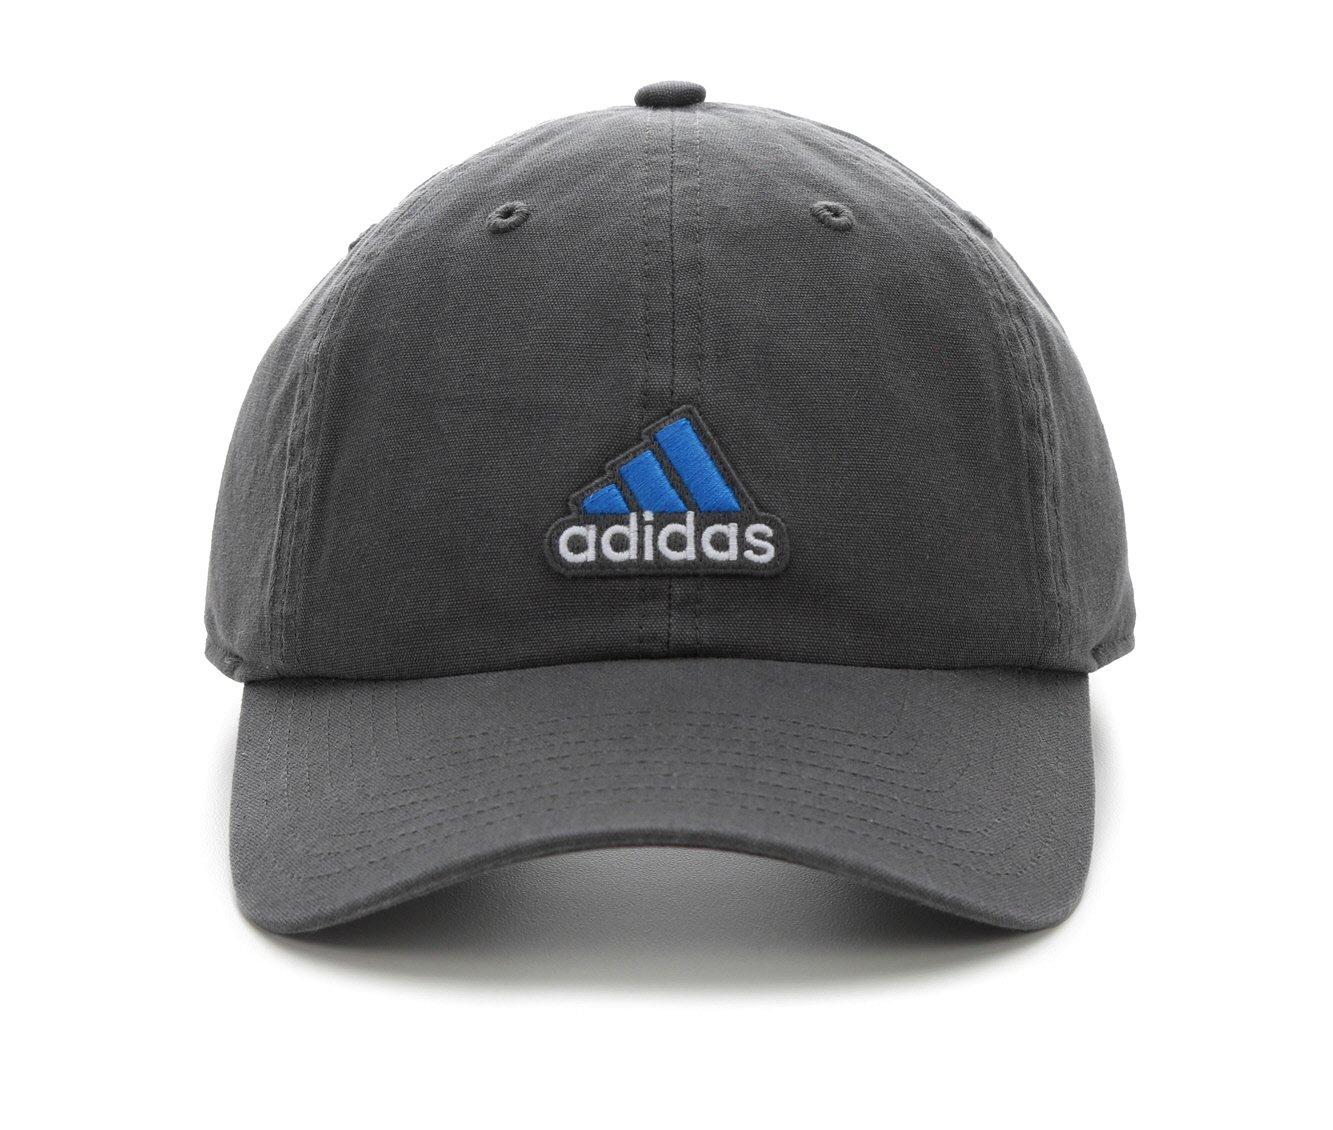 Adidas Mens Ultimate 2.0 Ball Cap